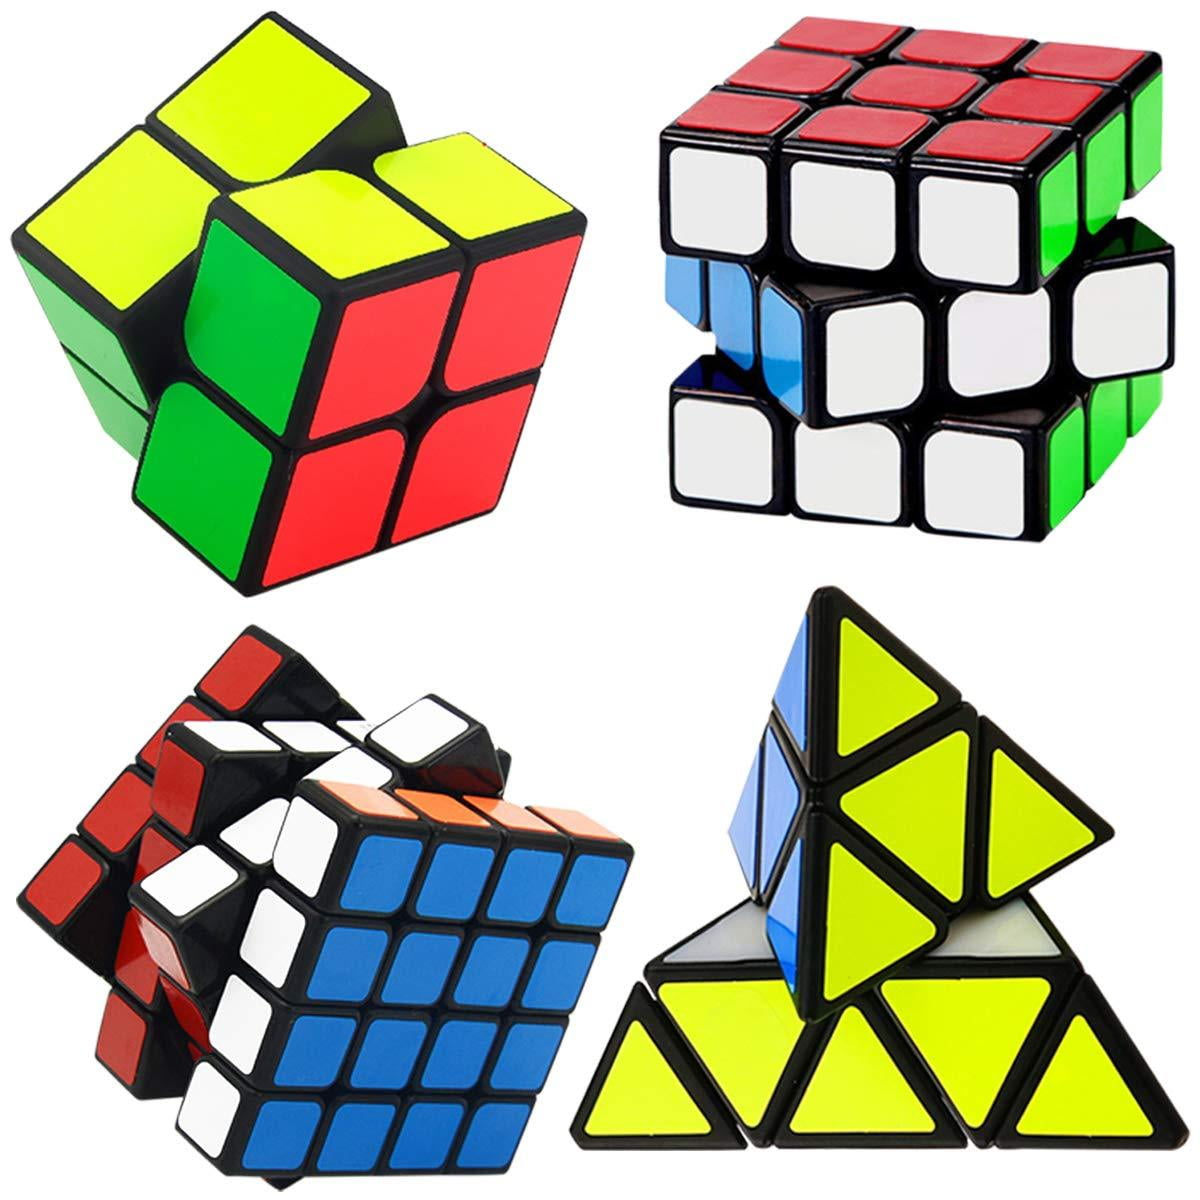 1x3x3 2x2x2 magic cube HJXDtech- 5 pack magic cube set of mirror cube 2x2 megaminx +2x2 pyraminx 